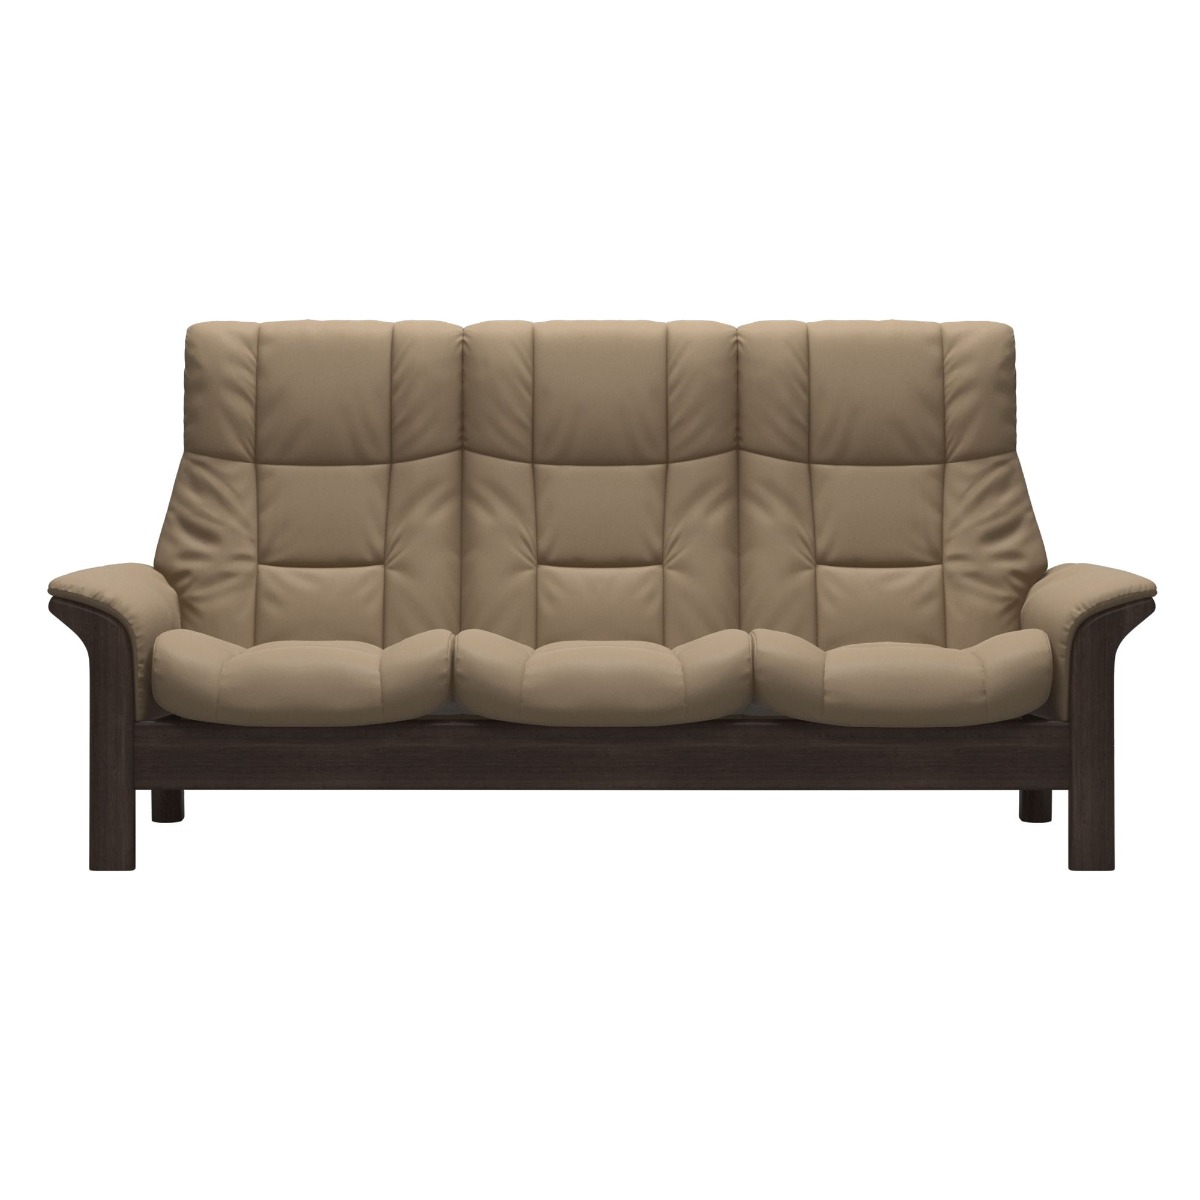 Stressless Windsor High Back 3 Seater Recliner Sofa, Neutral Leather | Barker & Stonehouse